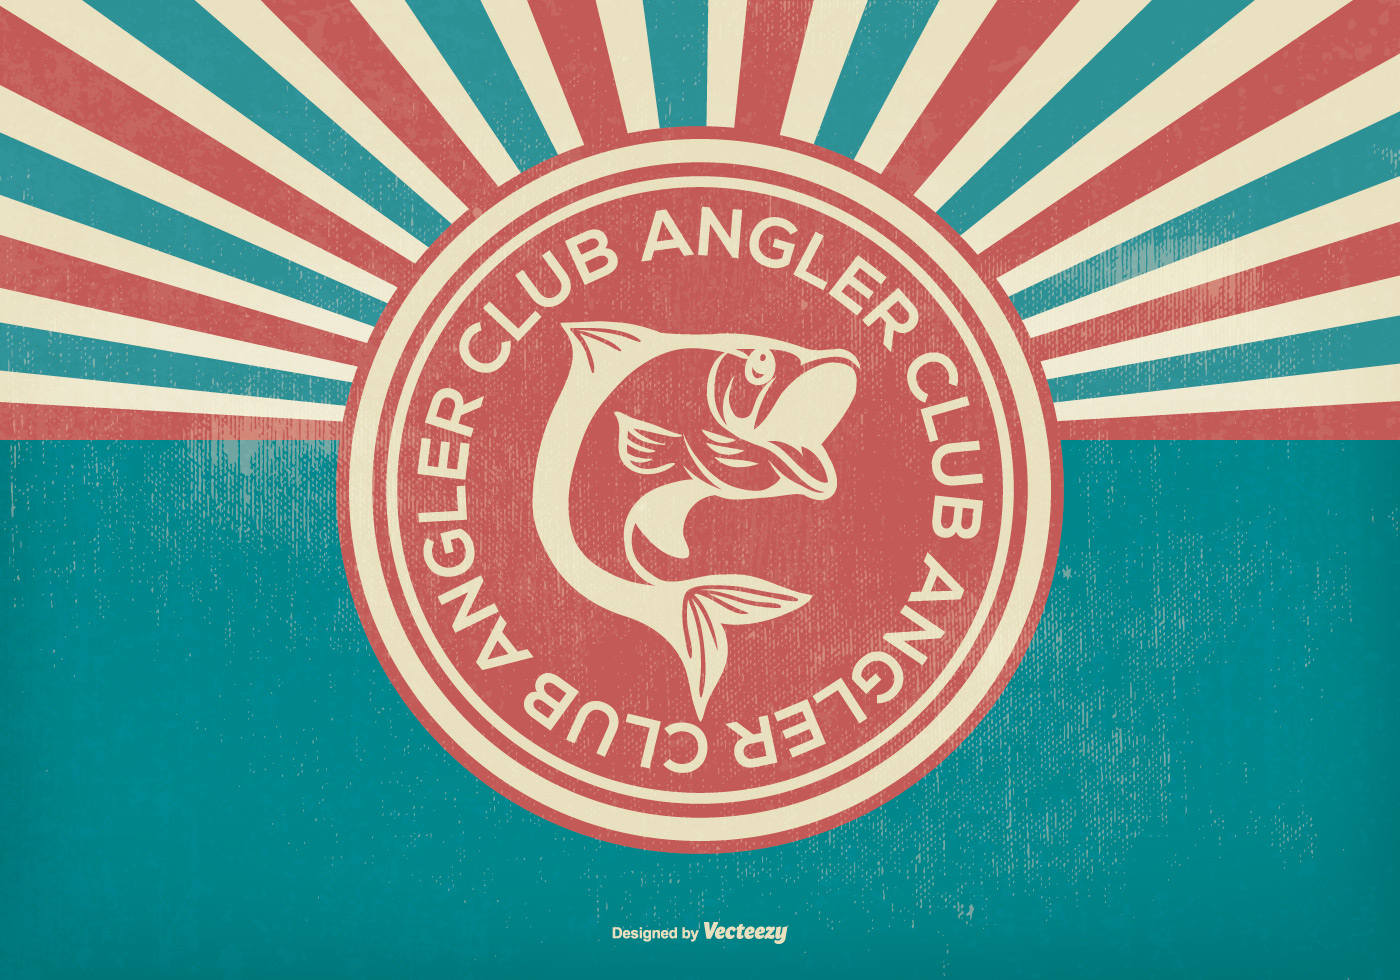 Download Retro Angler Club Illustration - Download Free Vector Art ...